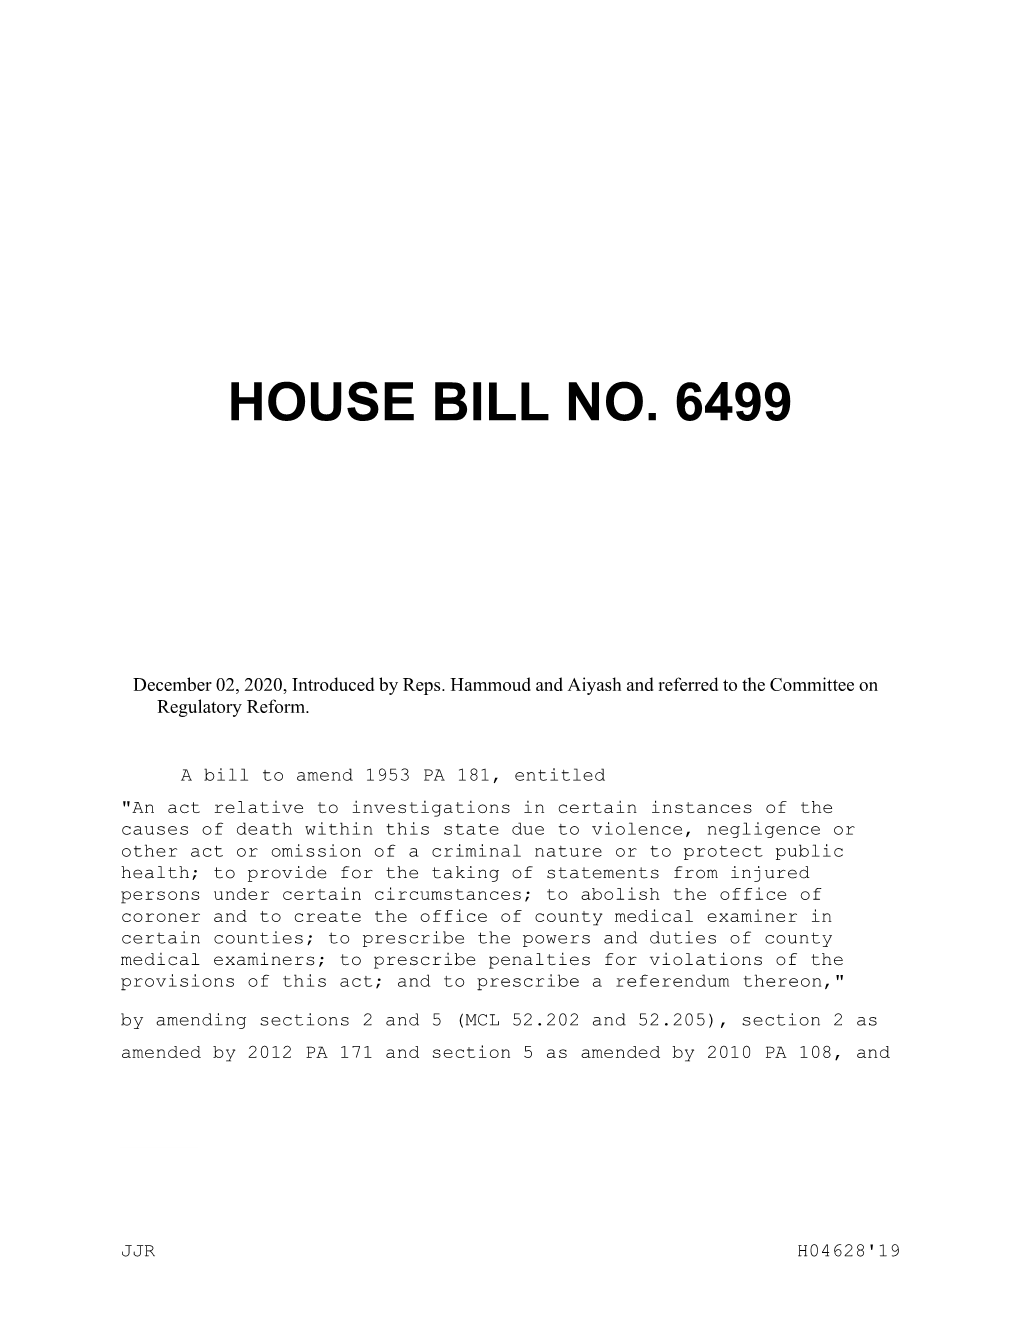 House Bill No. 6499